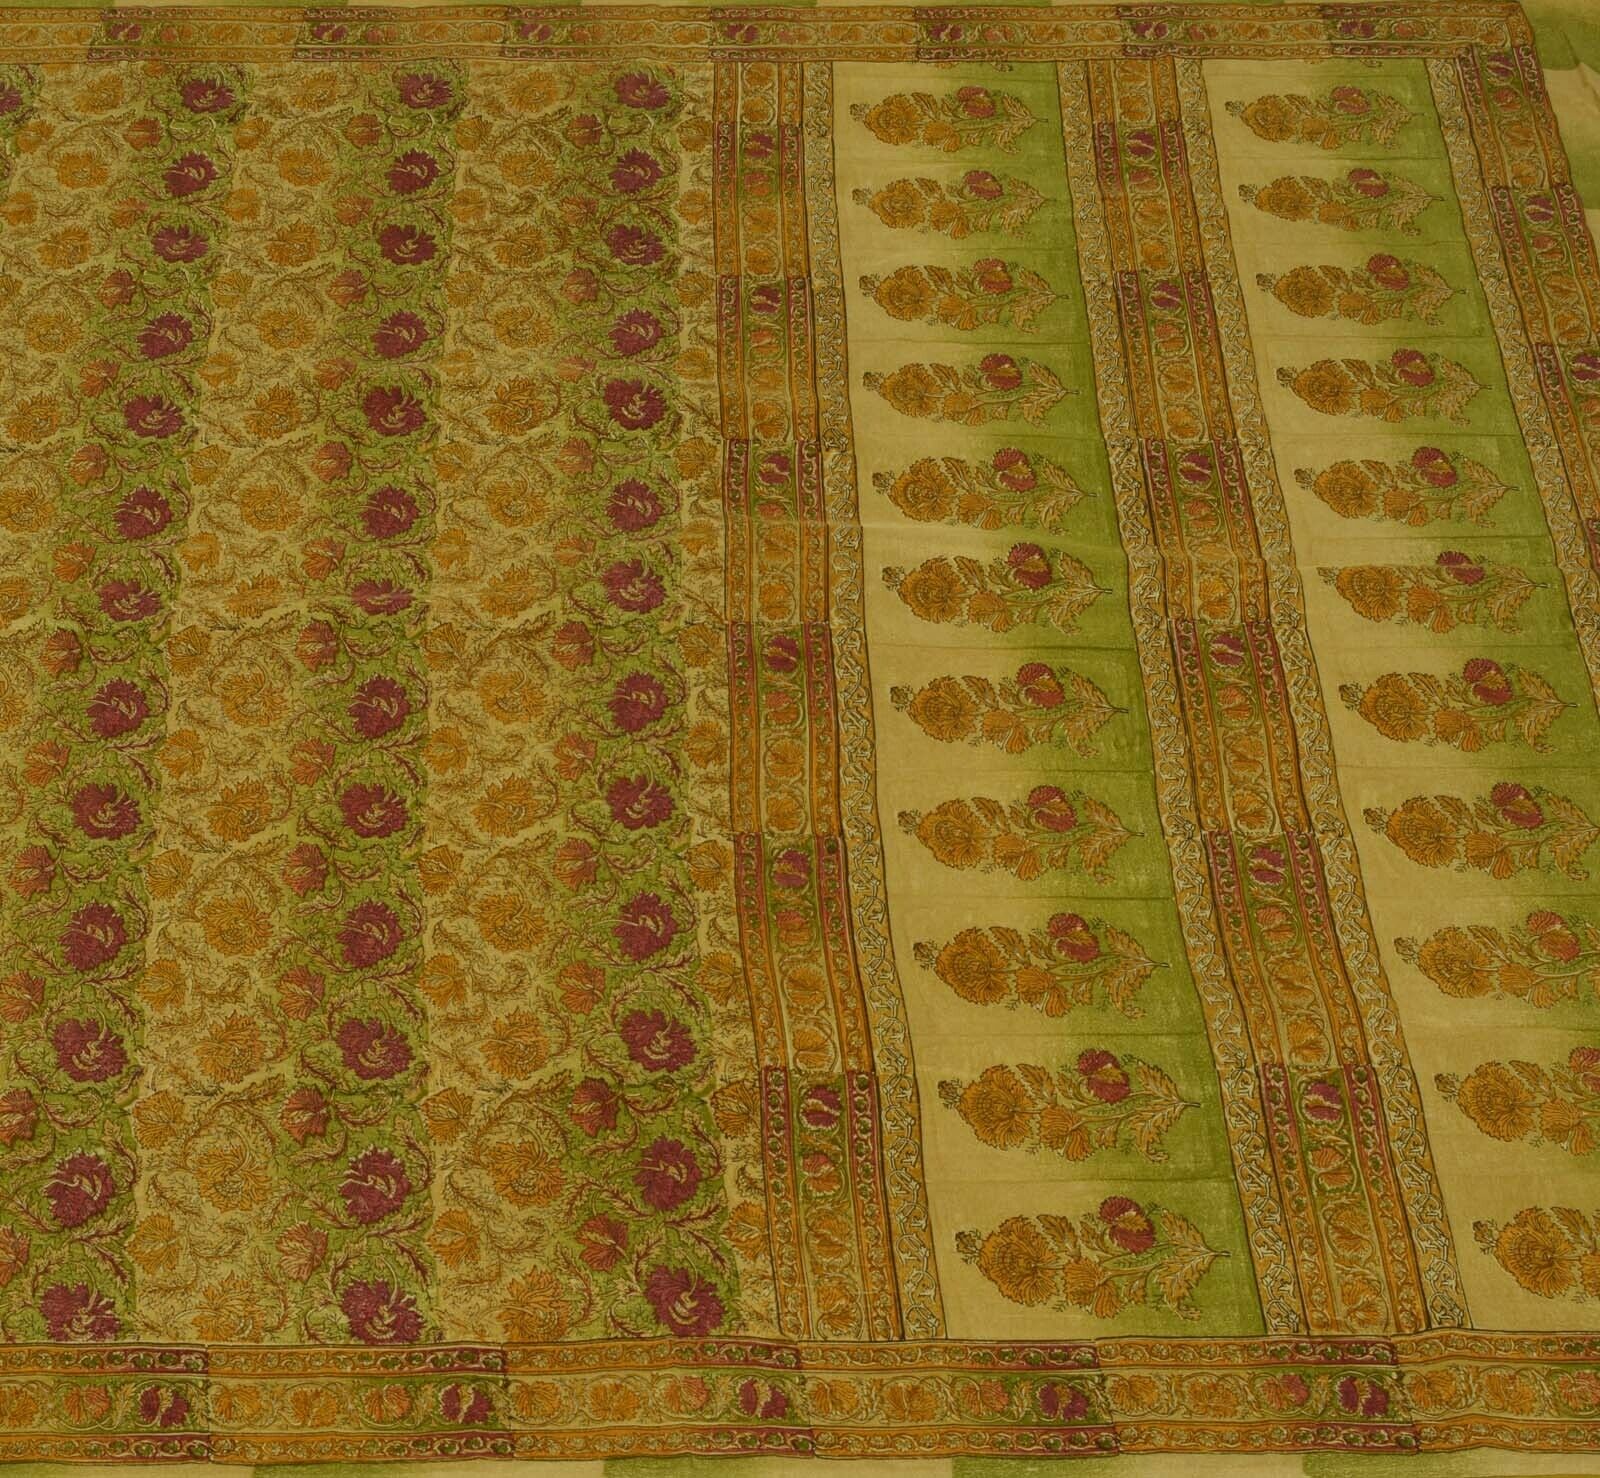 Vintage Indian Saree 100% Pure Silk Multi Color Printed Soft Sari Craft Fabric